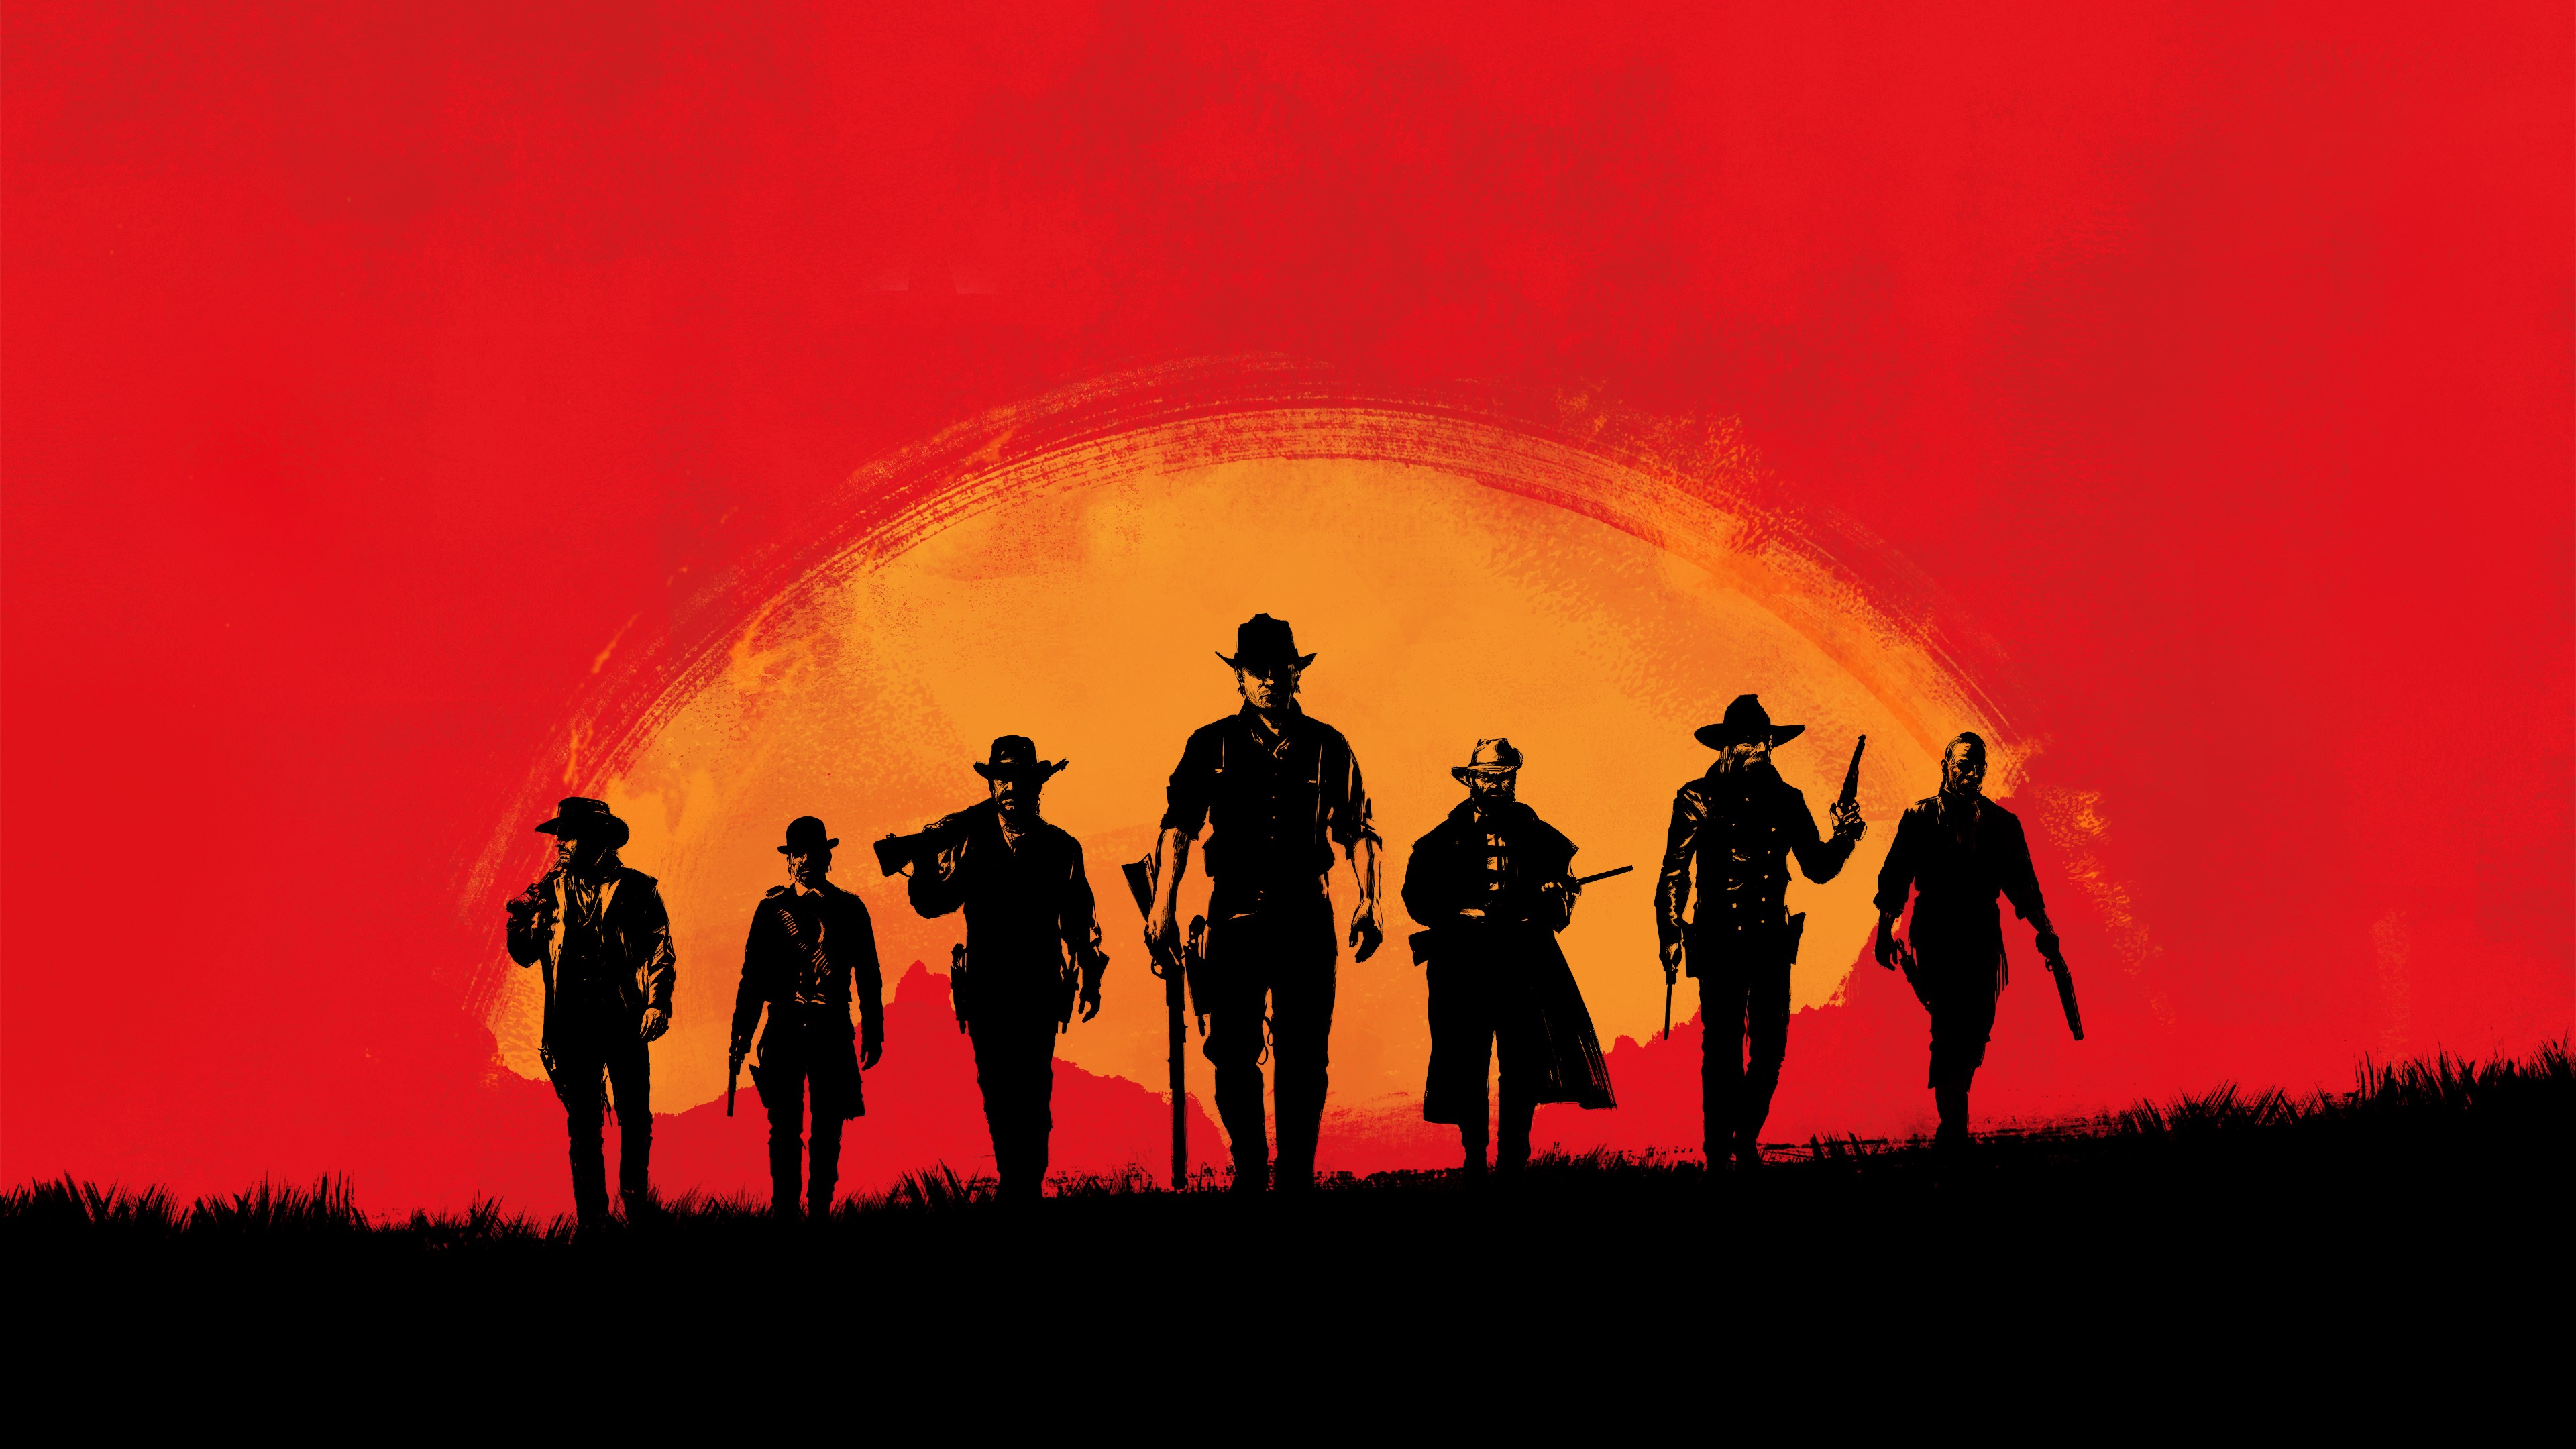 General 3840x2160 Red Dead Redemption red video games Rockstar Games sunset western sunrise minimalism Red Dead Redemption 2